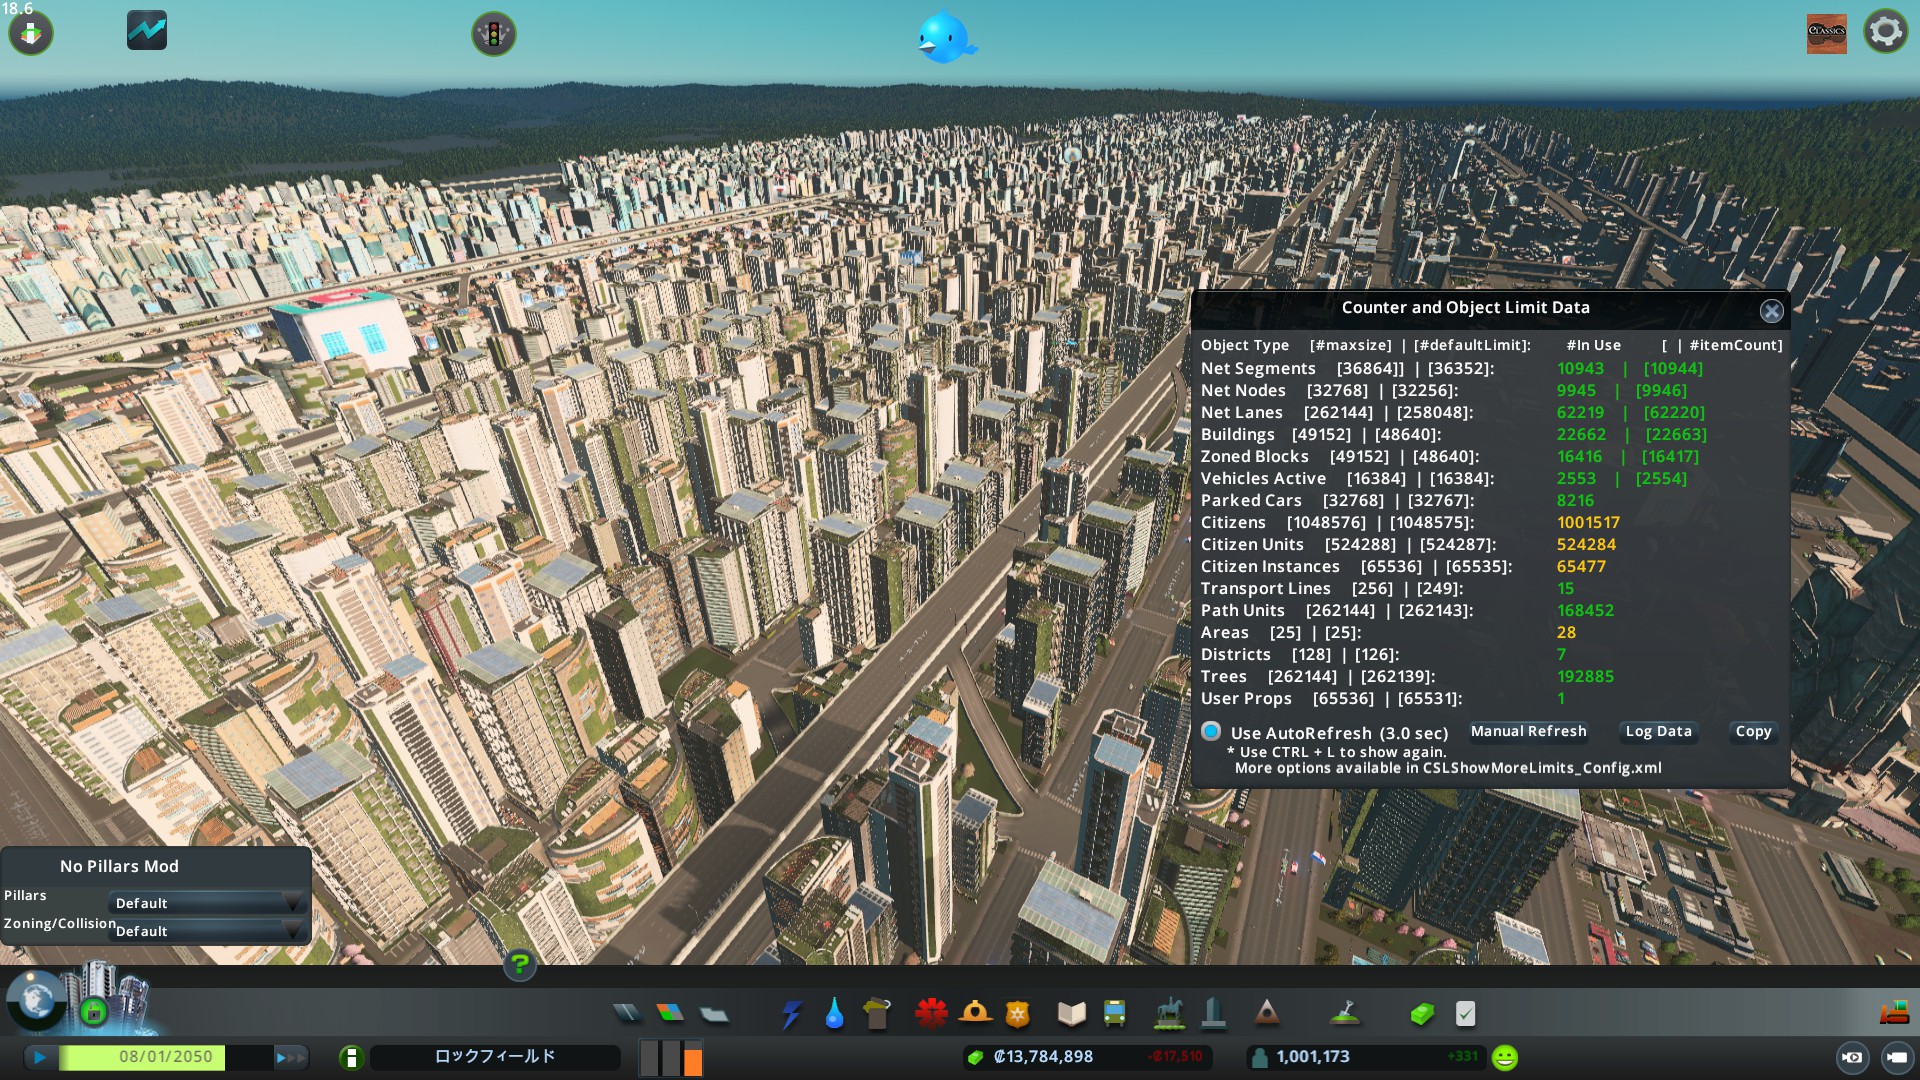 Cities 目指せ100万都市 9年目 完 攻略情報 N S Game Blog